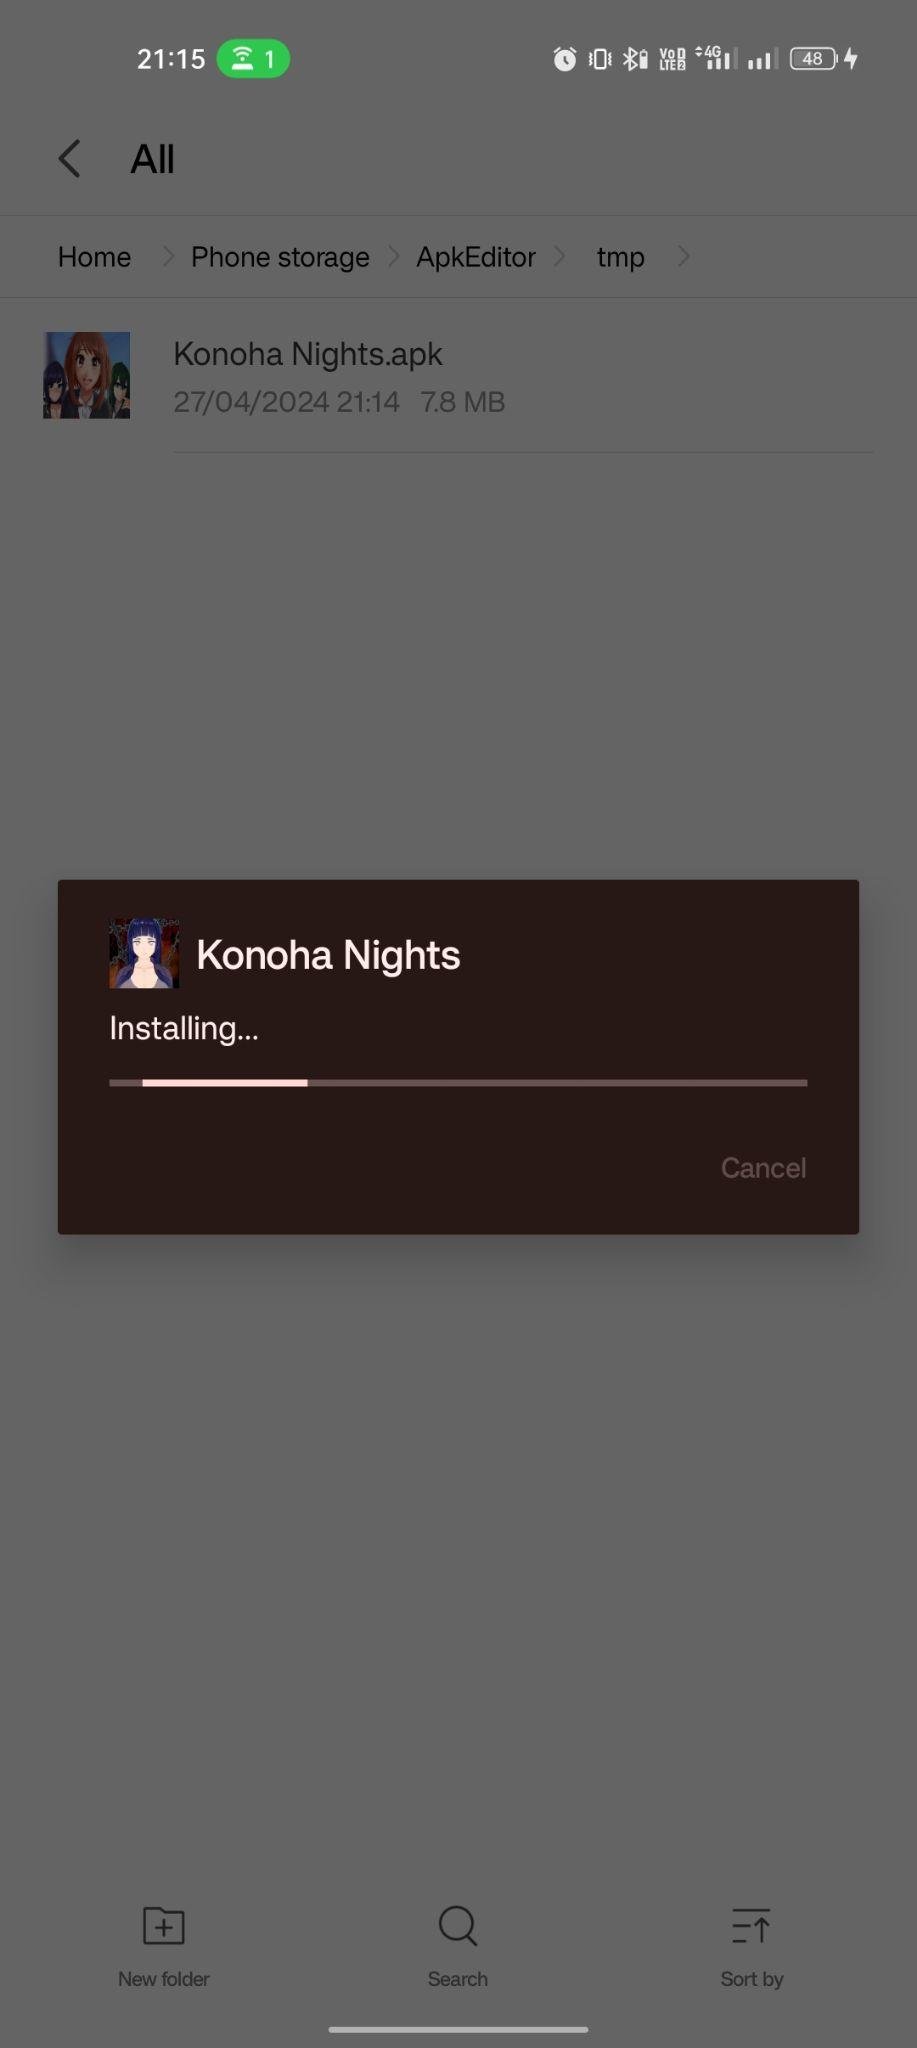 Konoha Nights apk installing